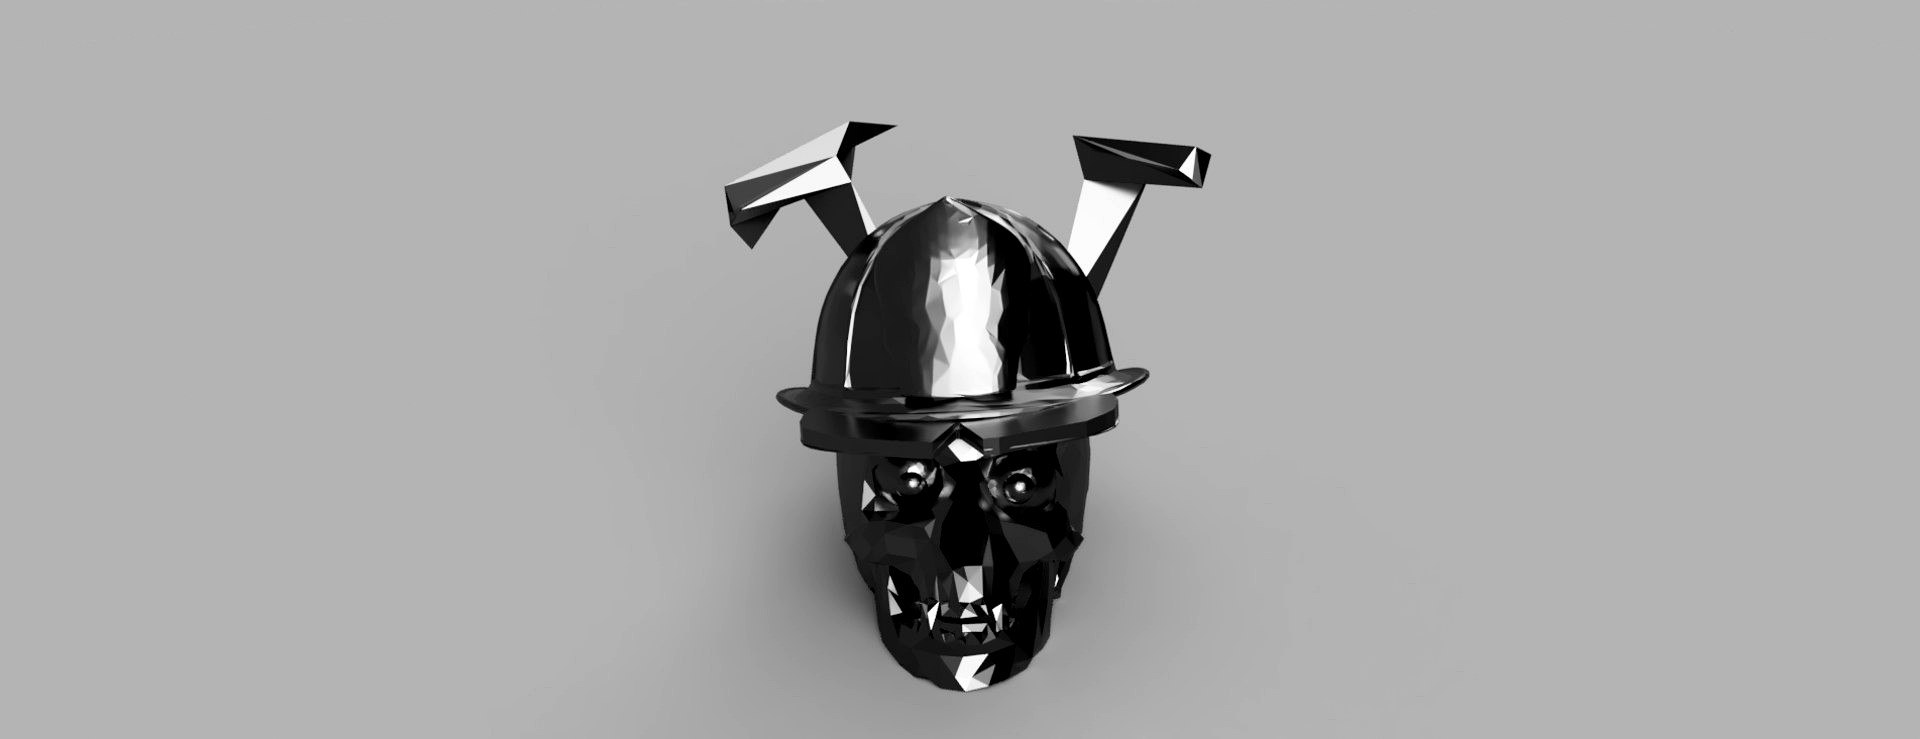 Skull fireman and helmet